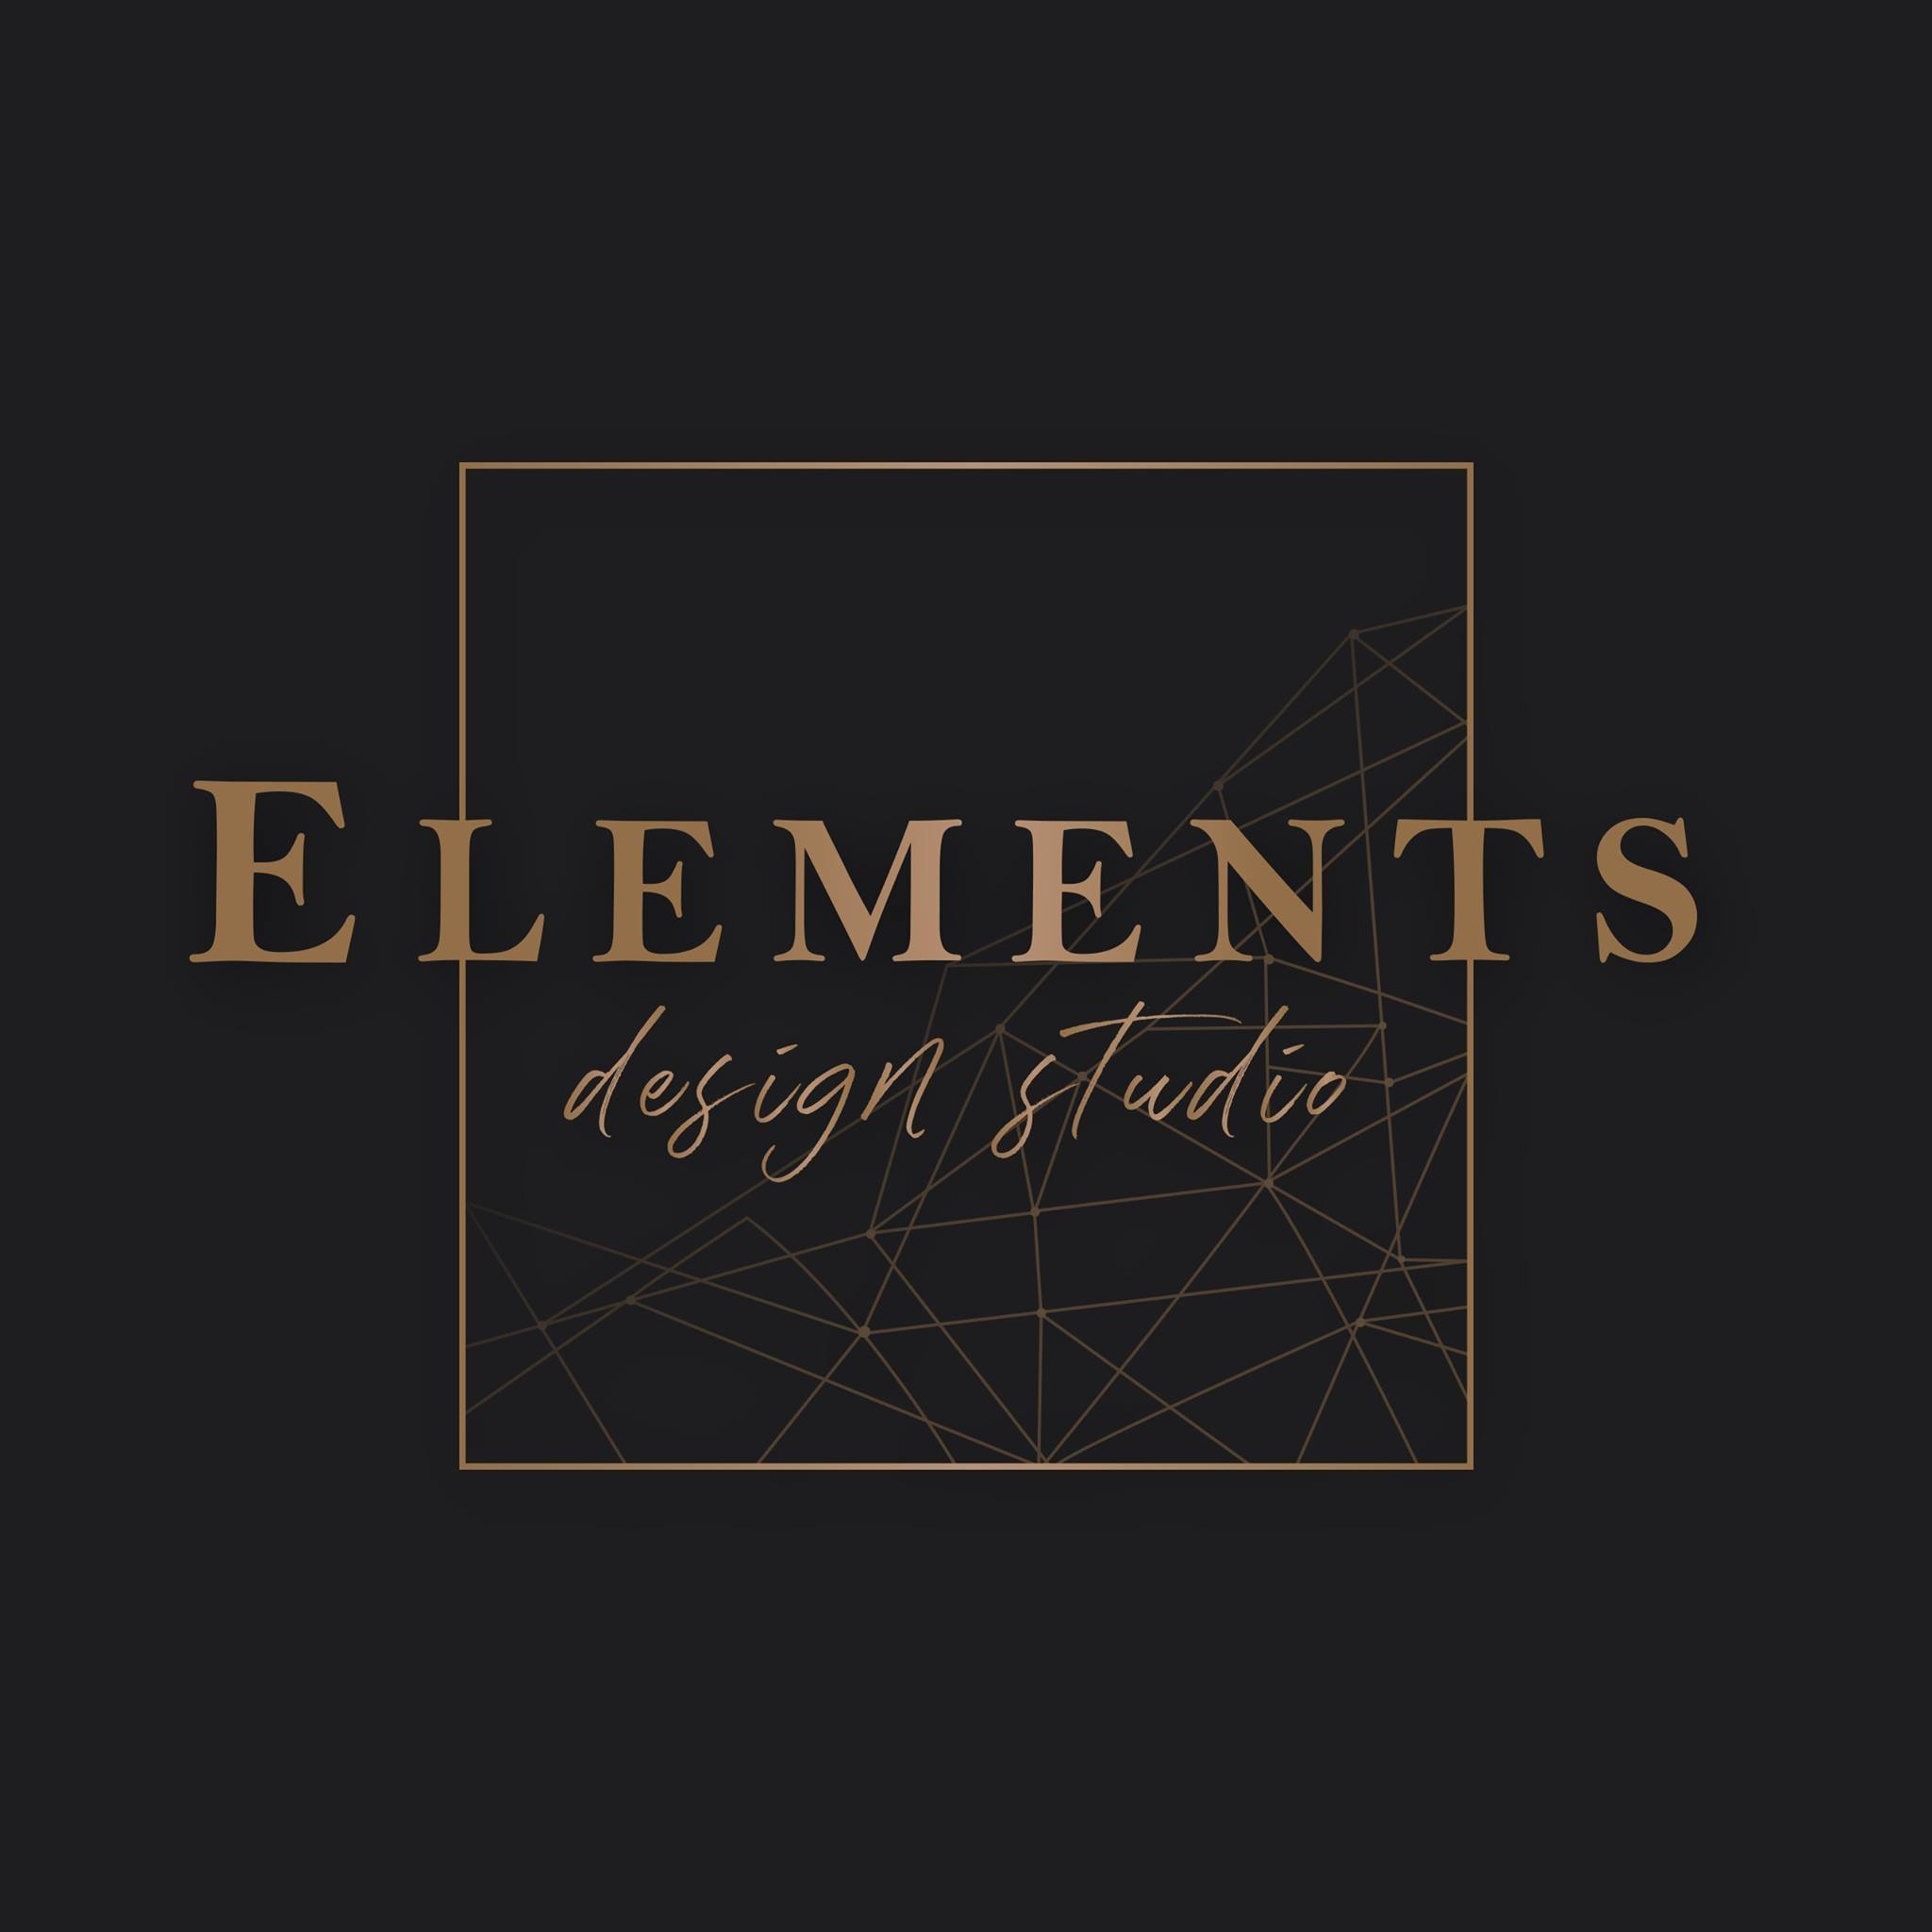 Elements design studio